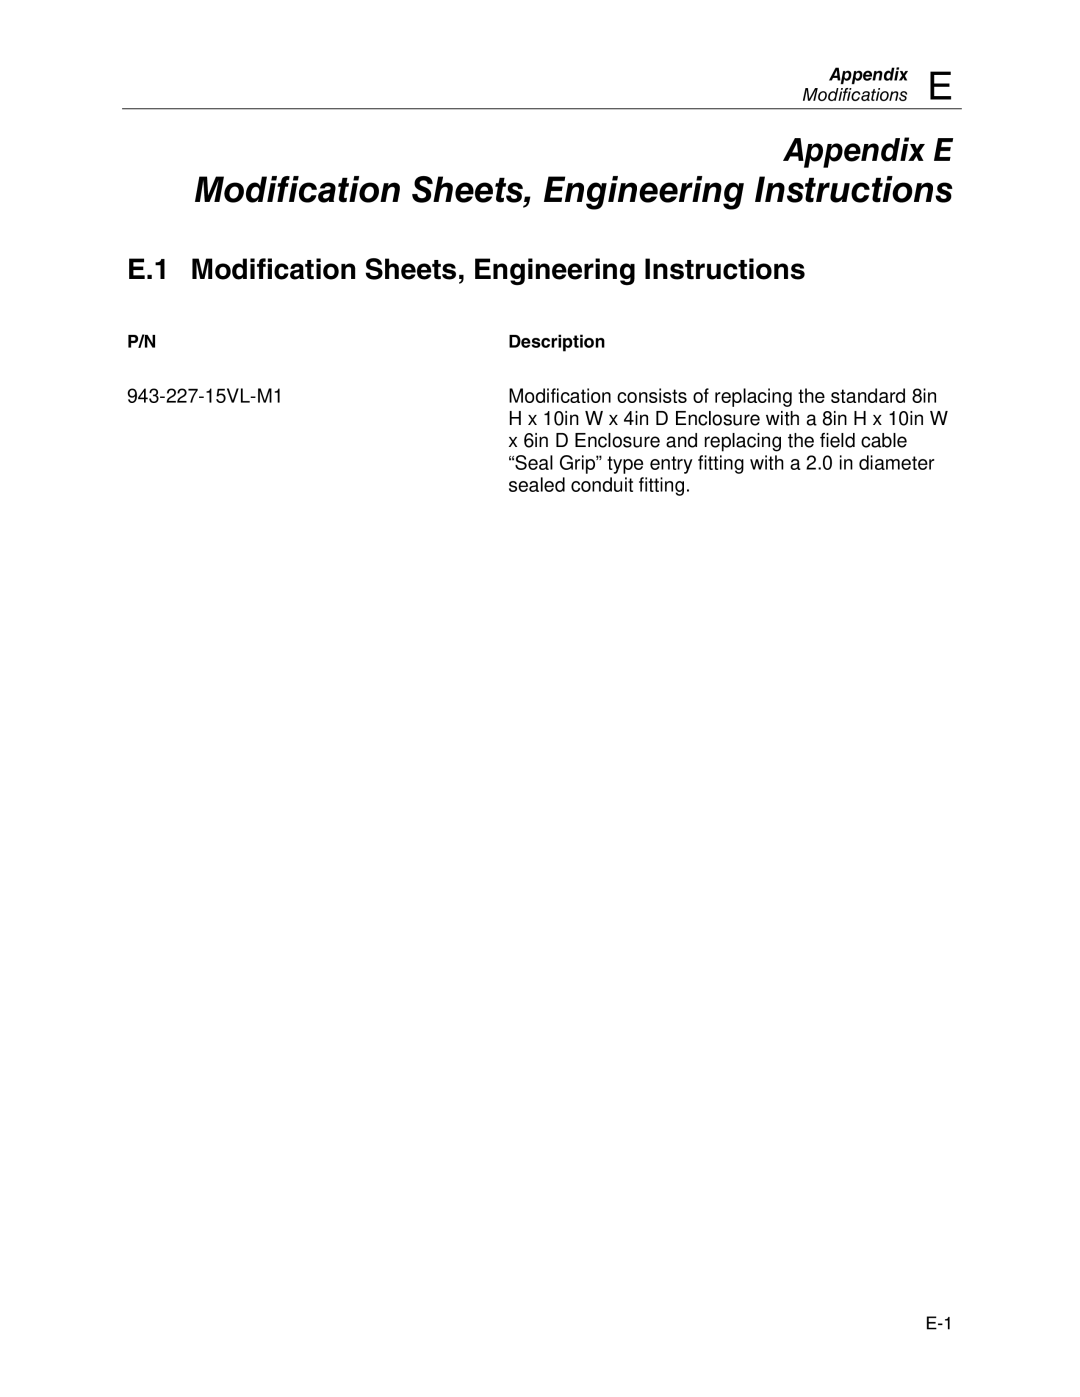 Fluke 943-227-15, 943-27 manual Modification Sheets, Engineering Instructions 